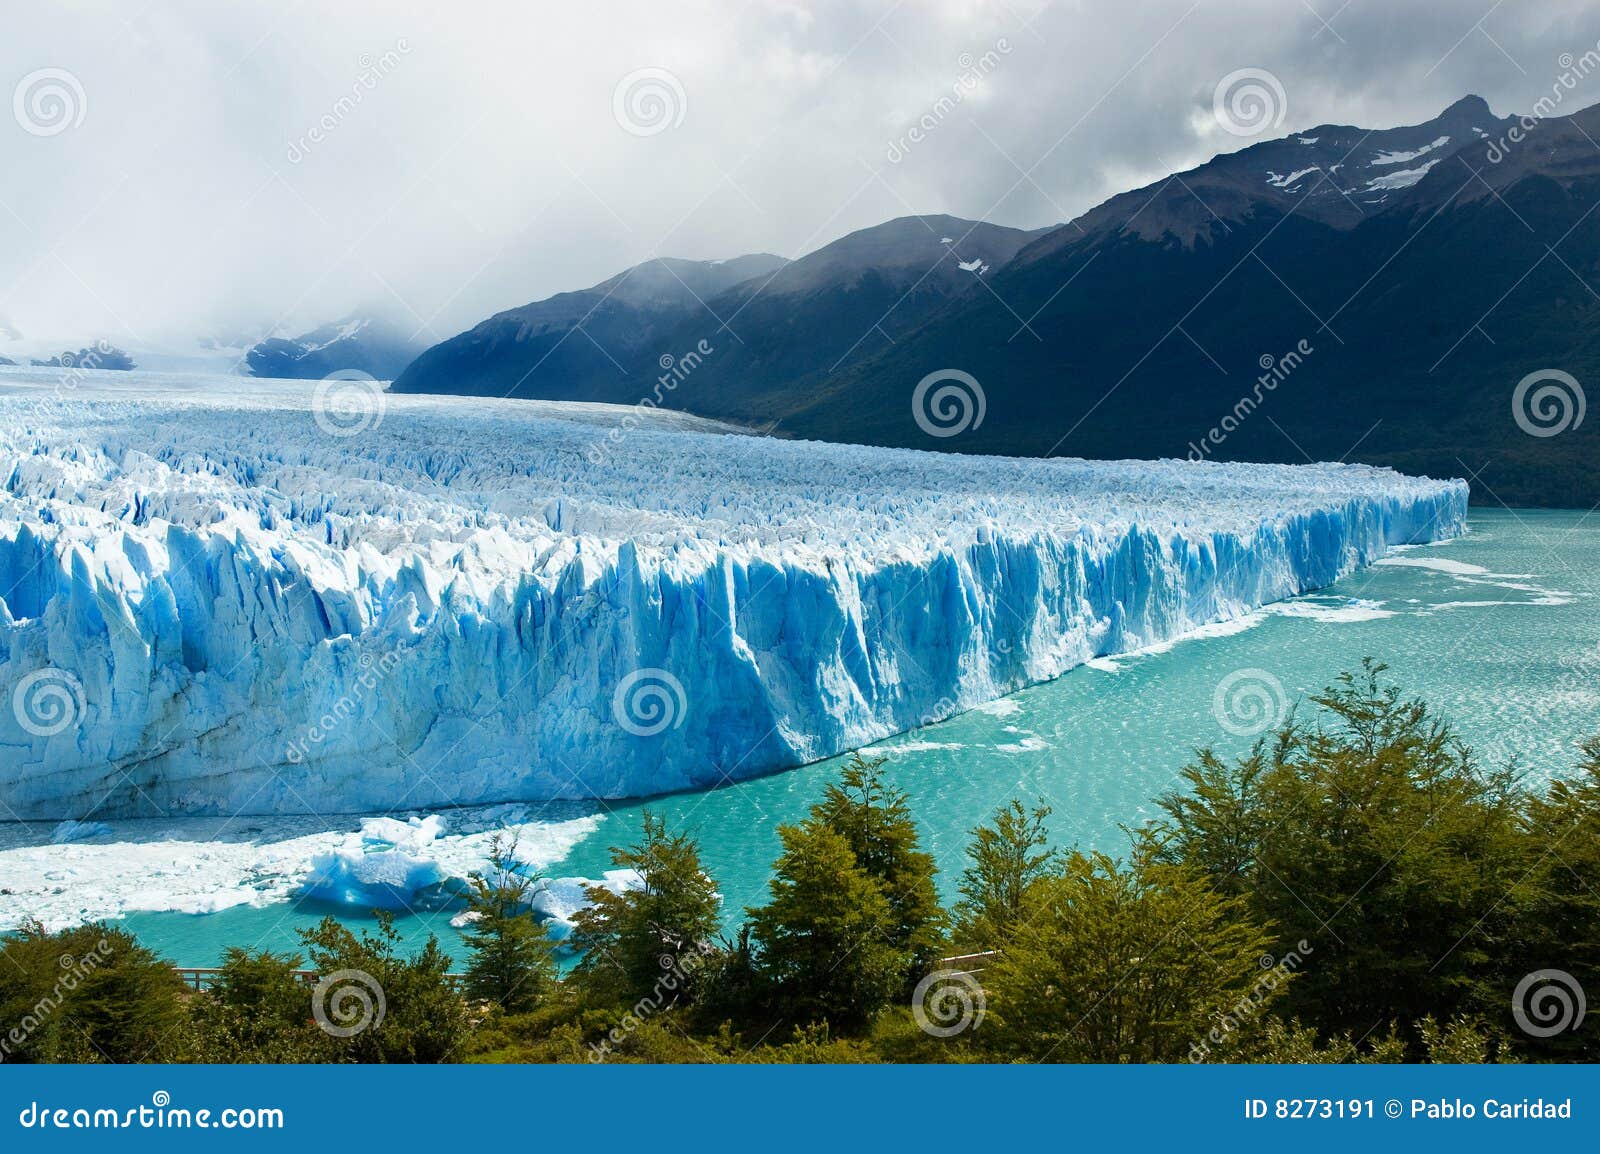 perito moreno glacier, patagonia, argentina.